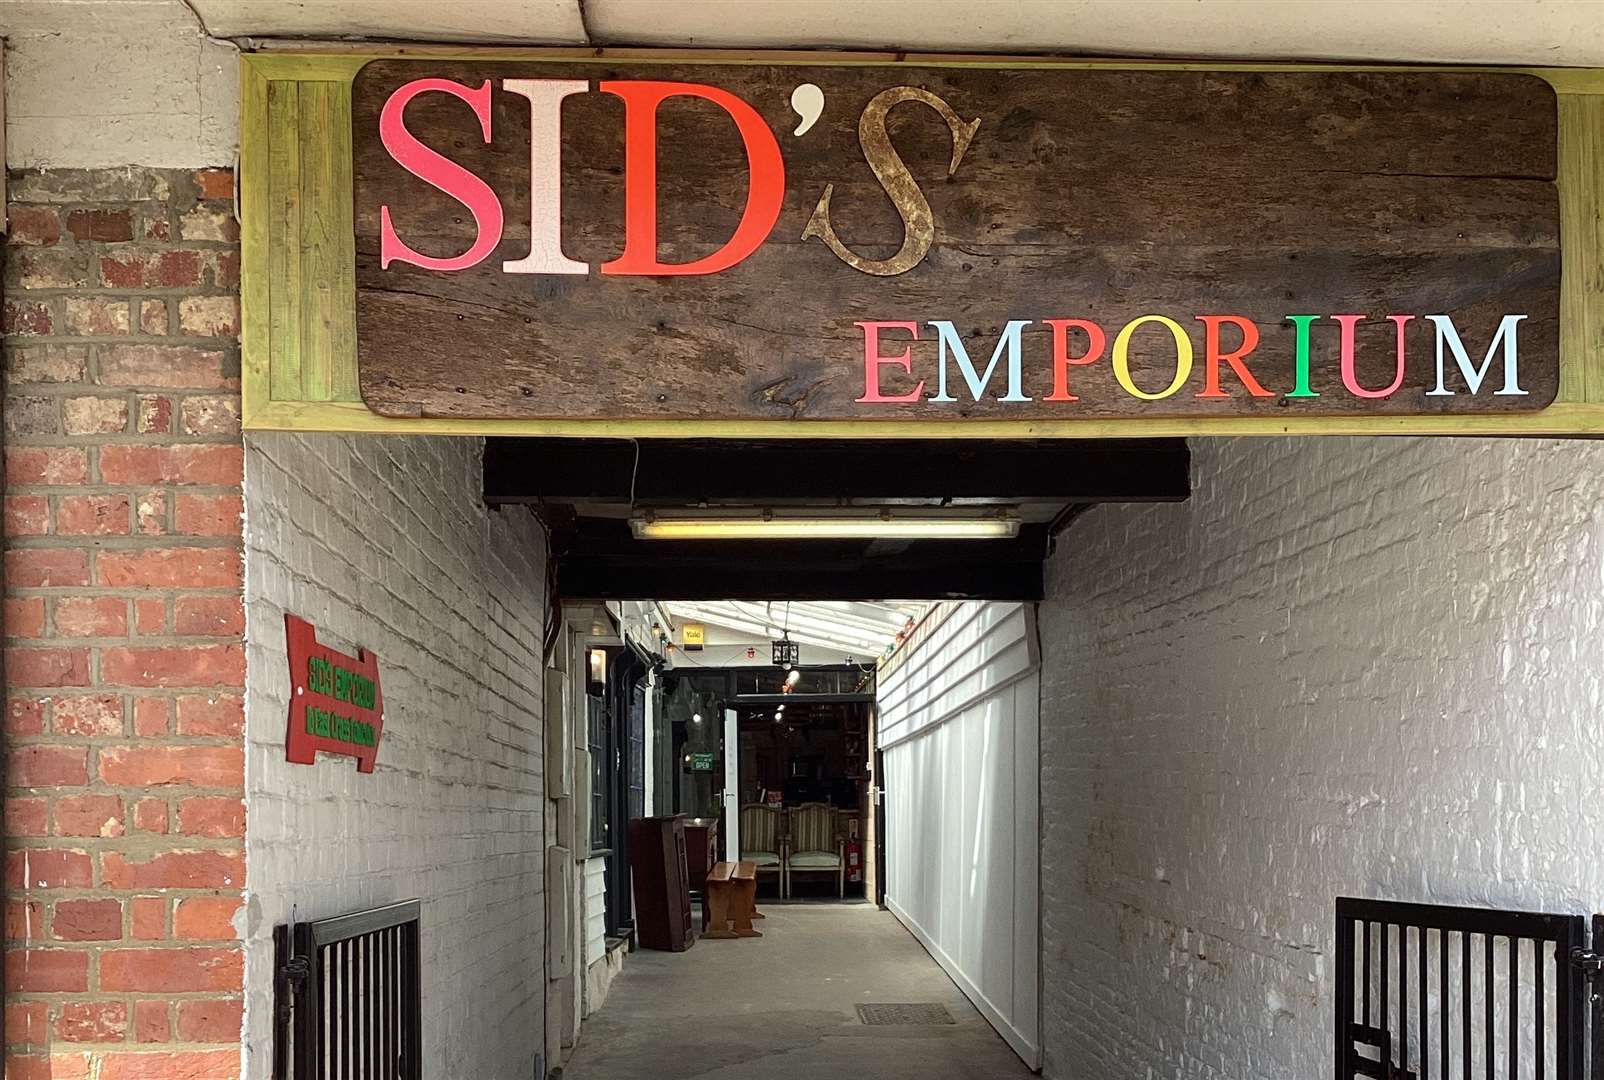 Sid's Shop in East Cross, Tenterden